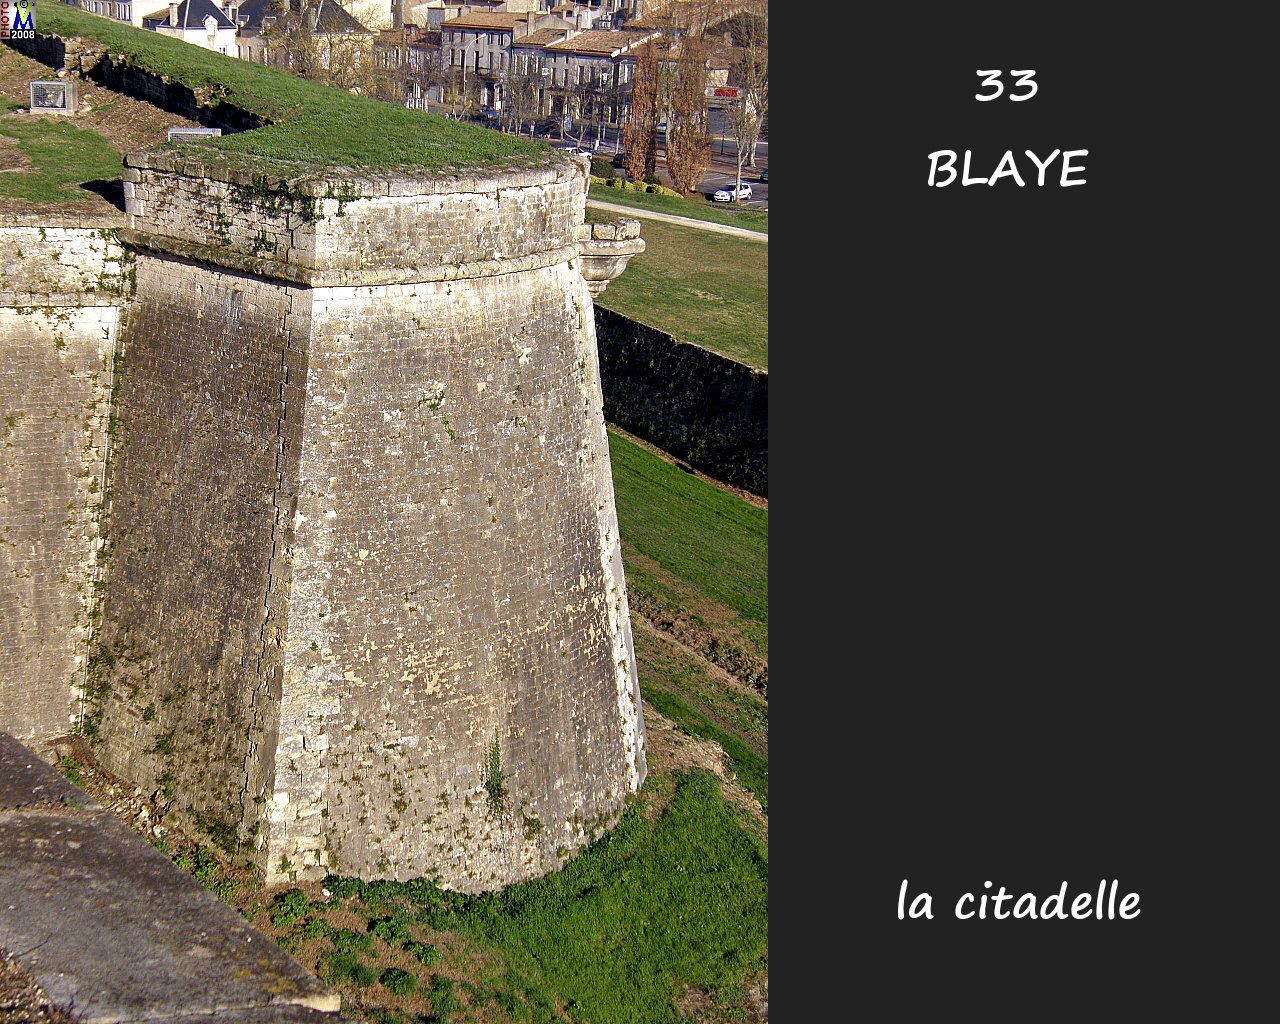 33BLAYE_citadelle_142.jpg